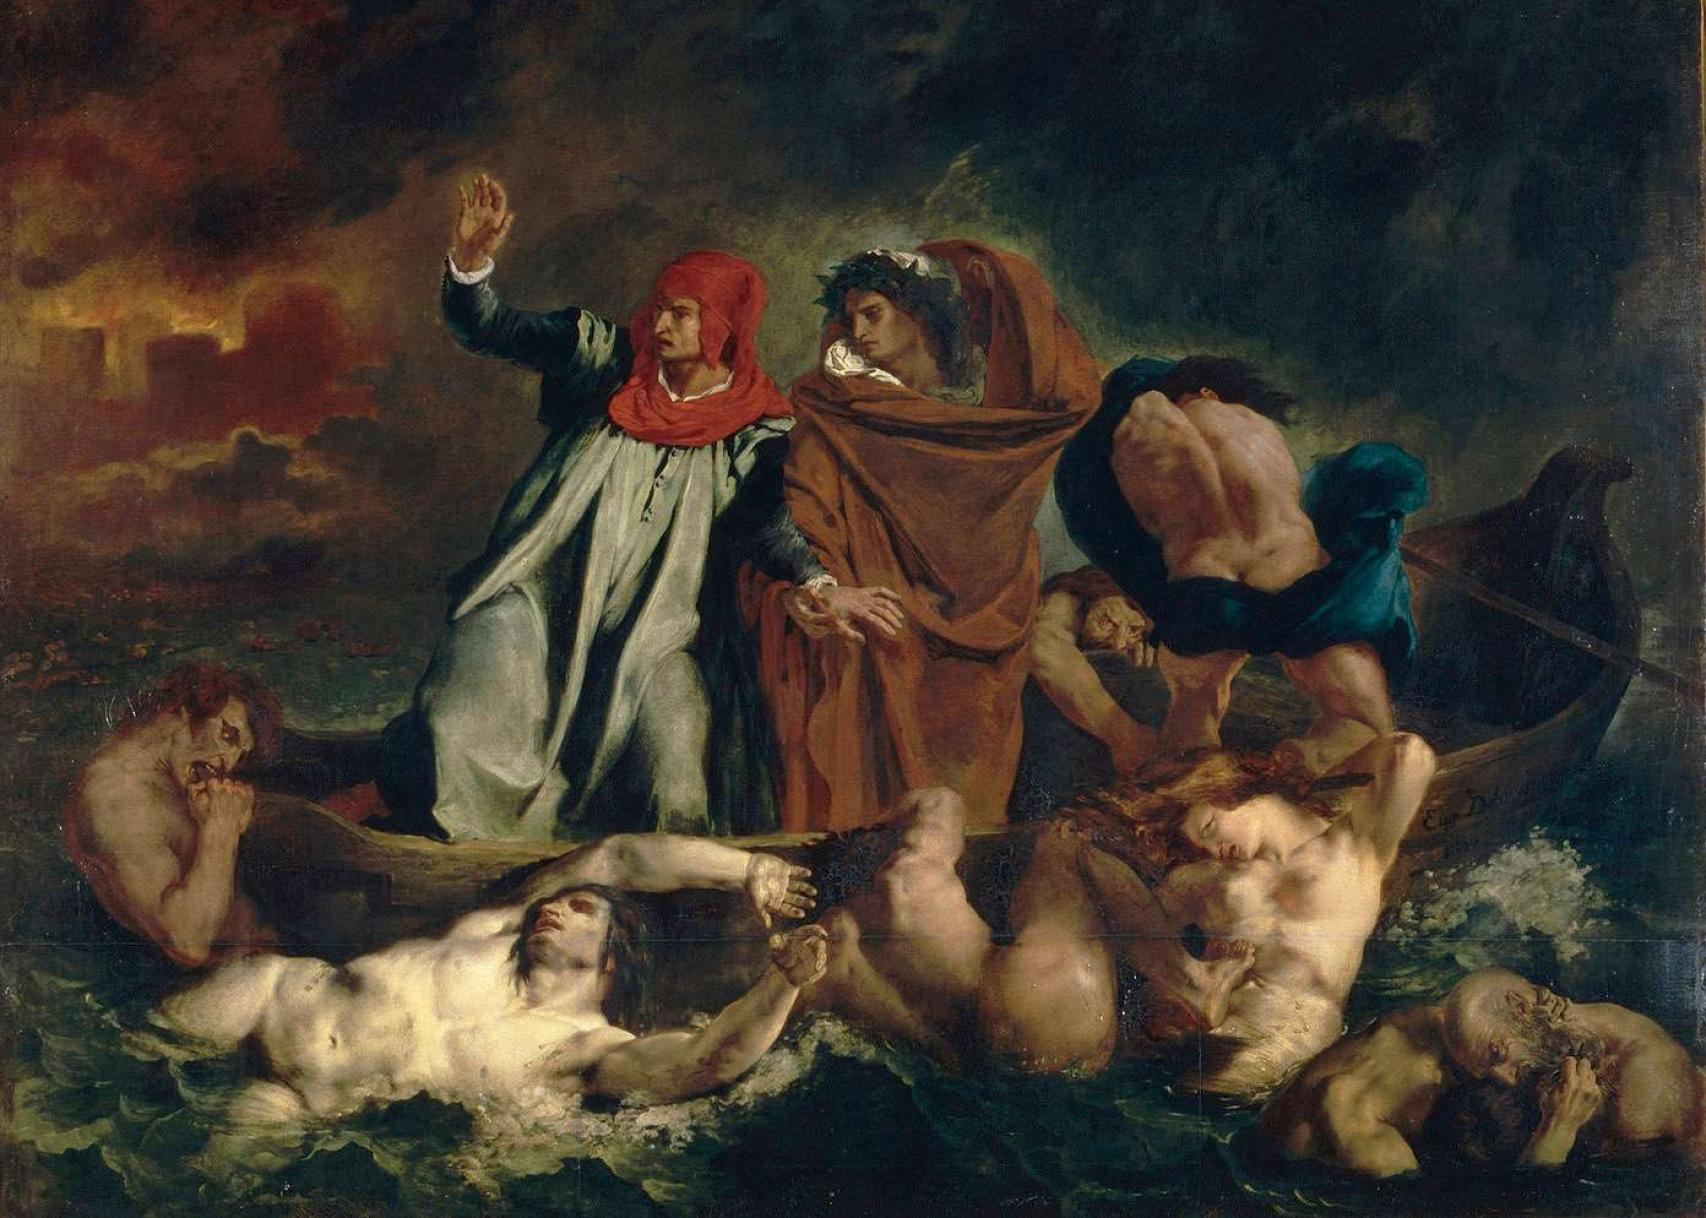 'La barca de Dante', by Eugène Delacroix.